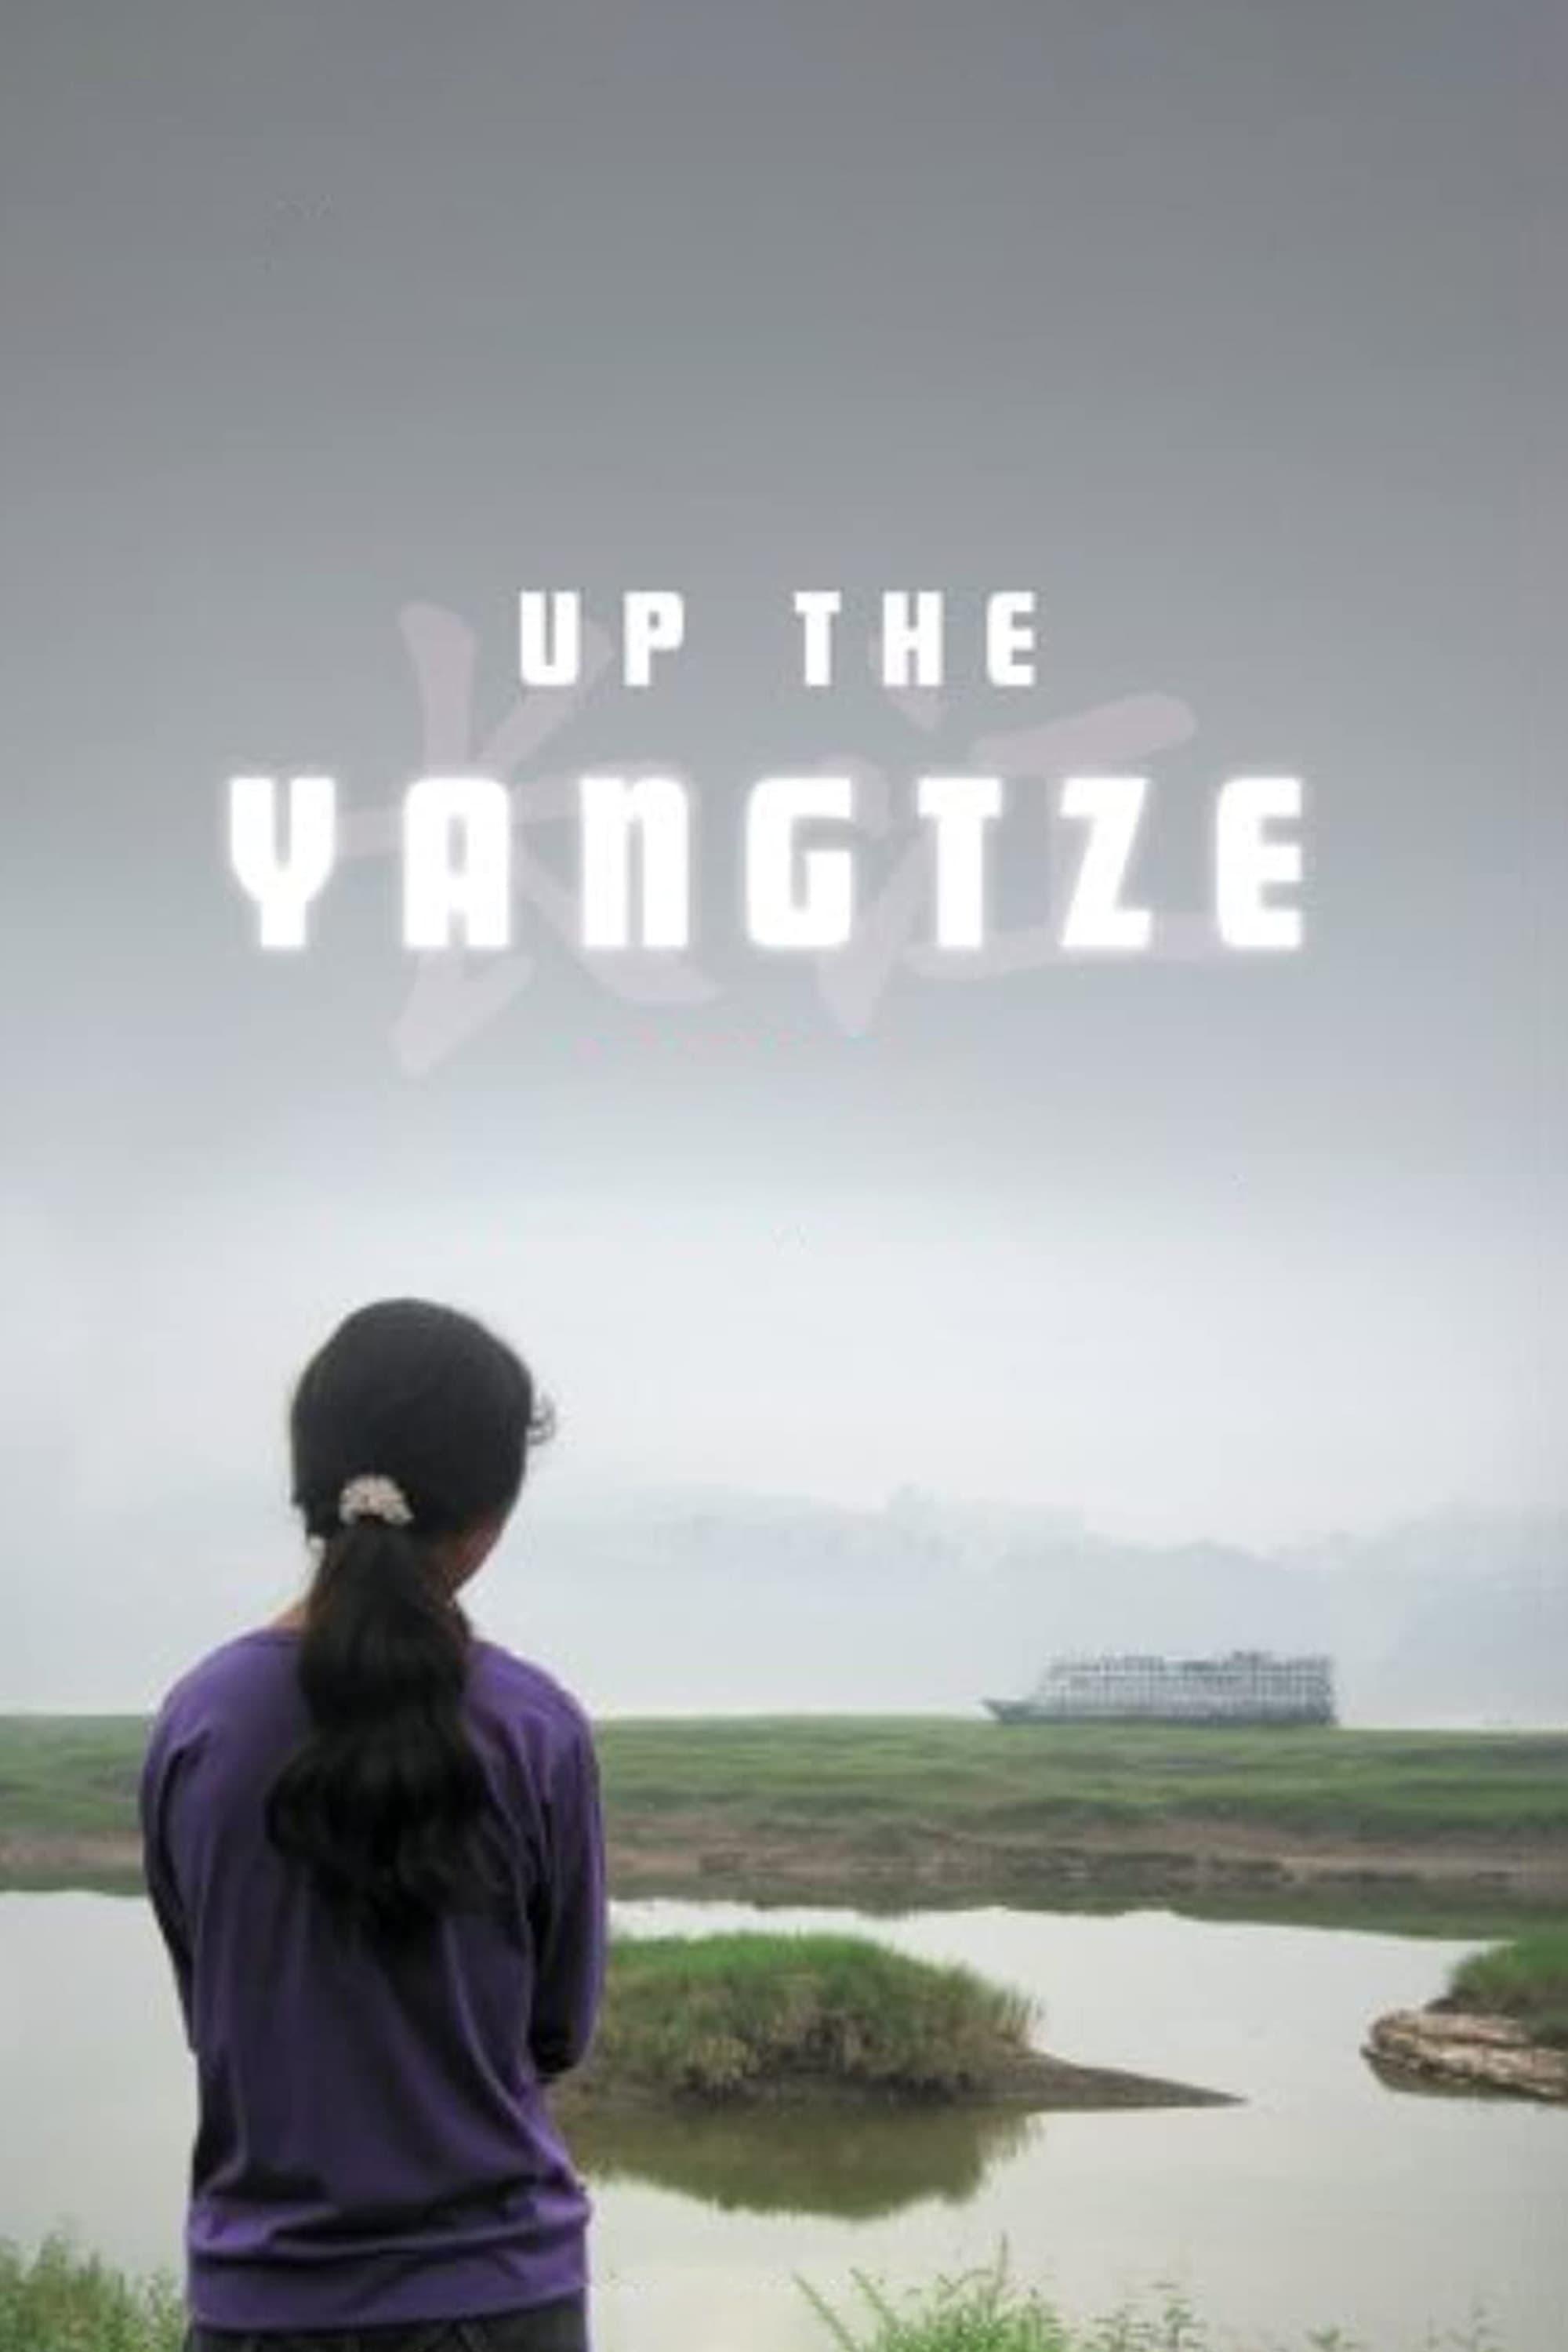 Up the Yangtze poster